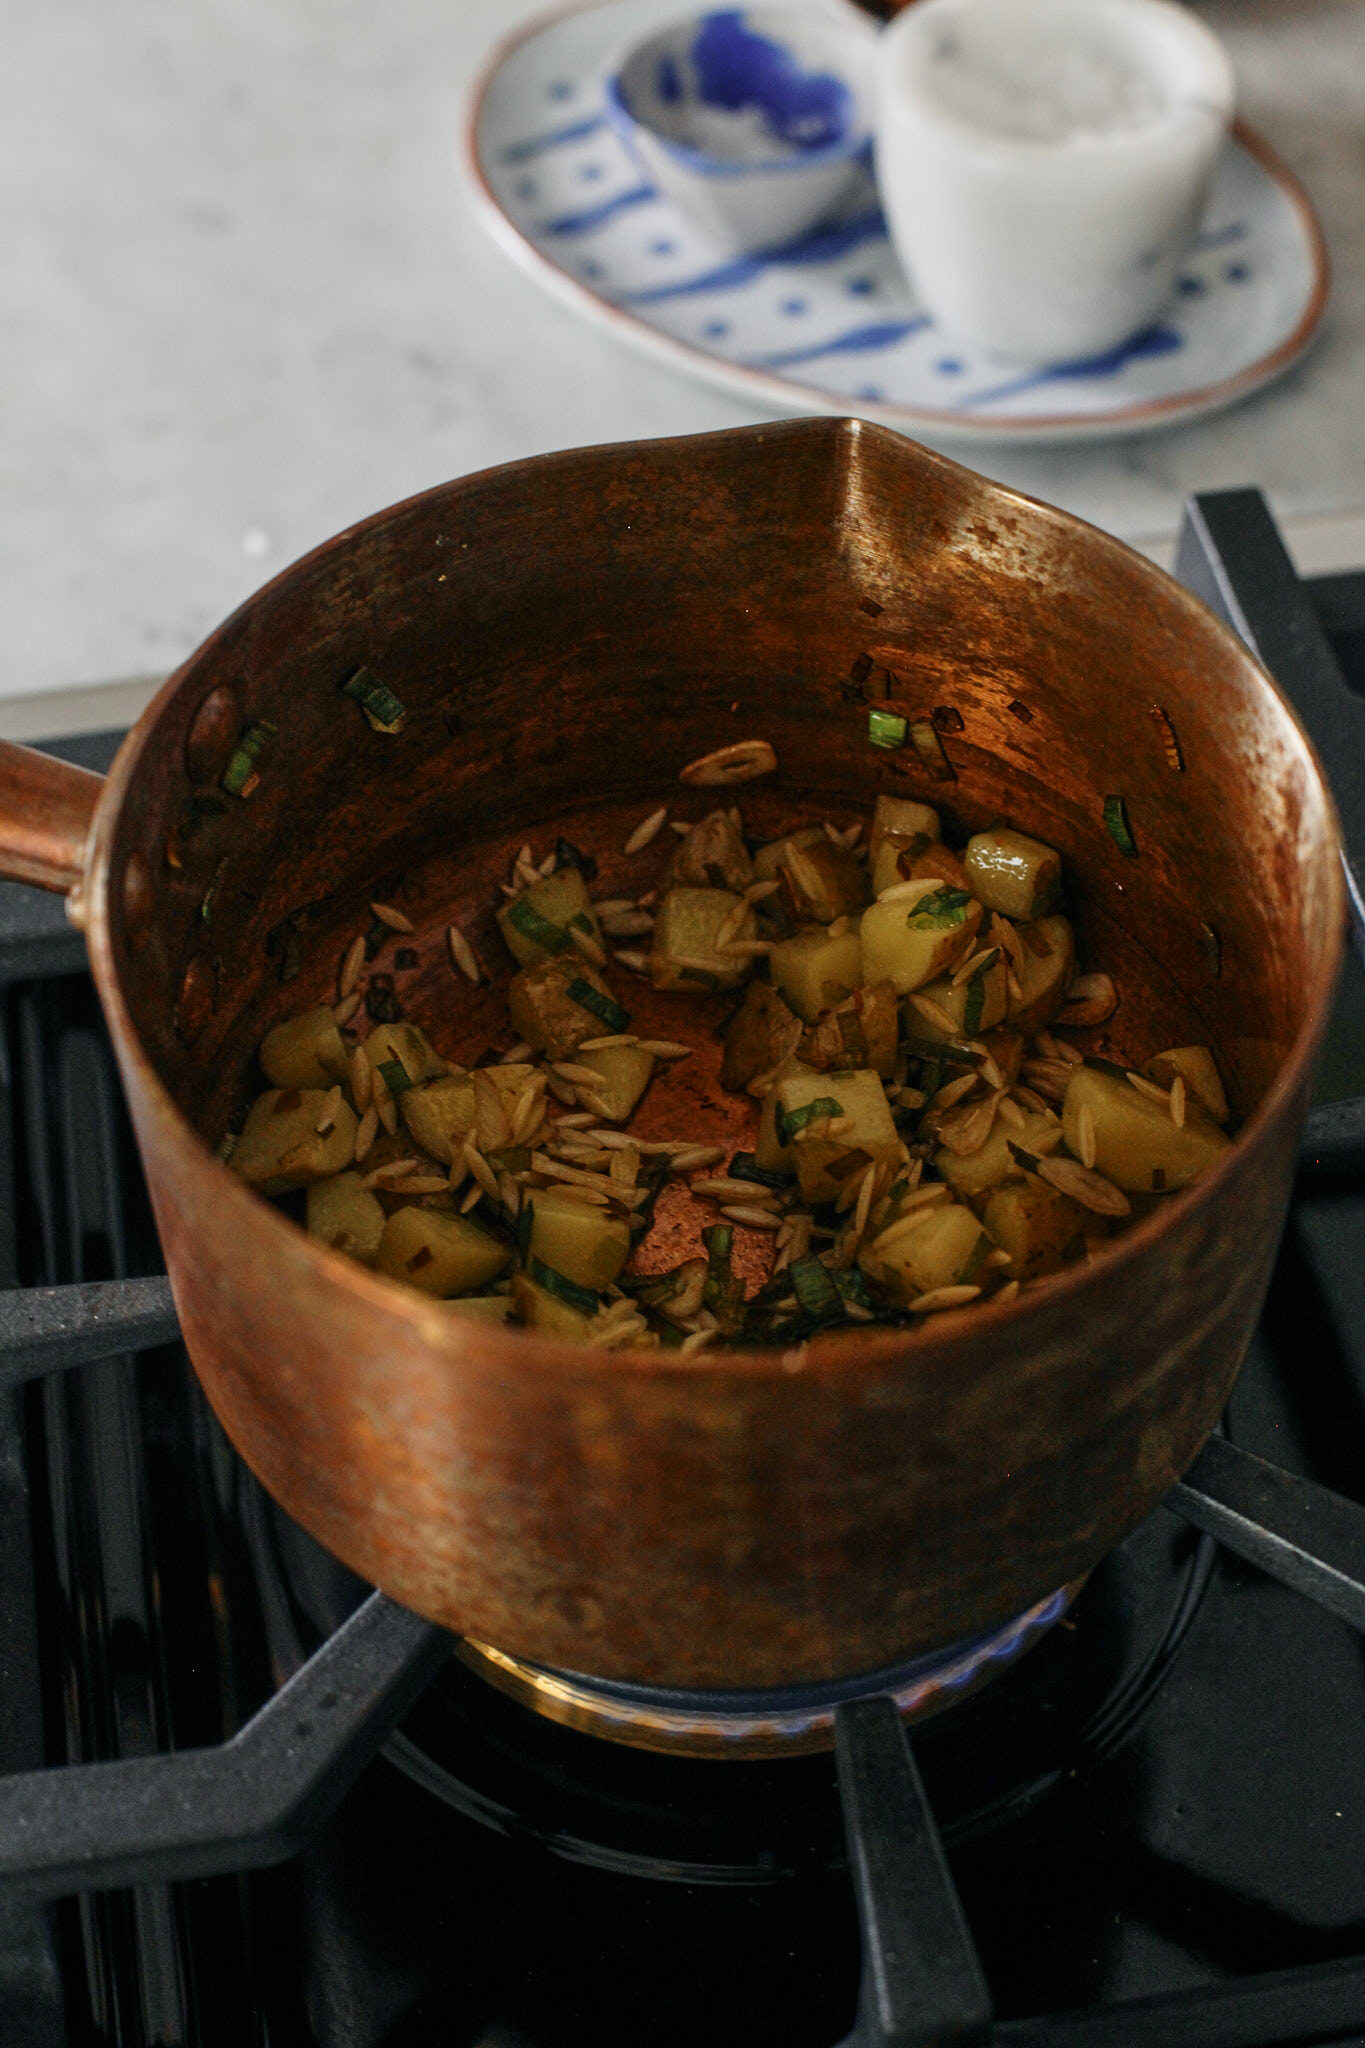 chopped leek, potato and garlic in a pot sautéeing